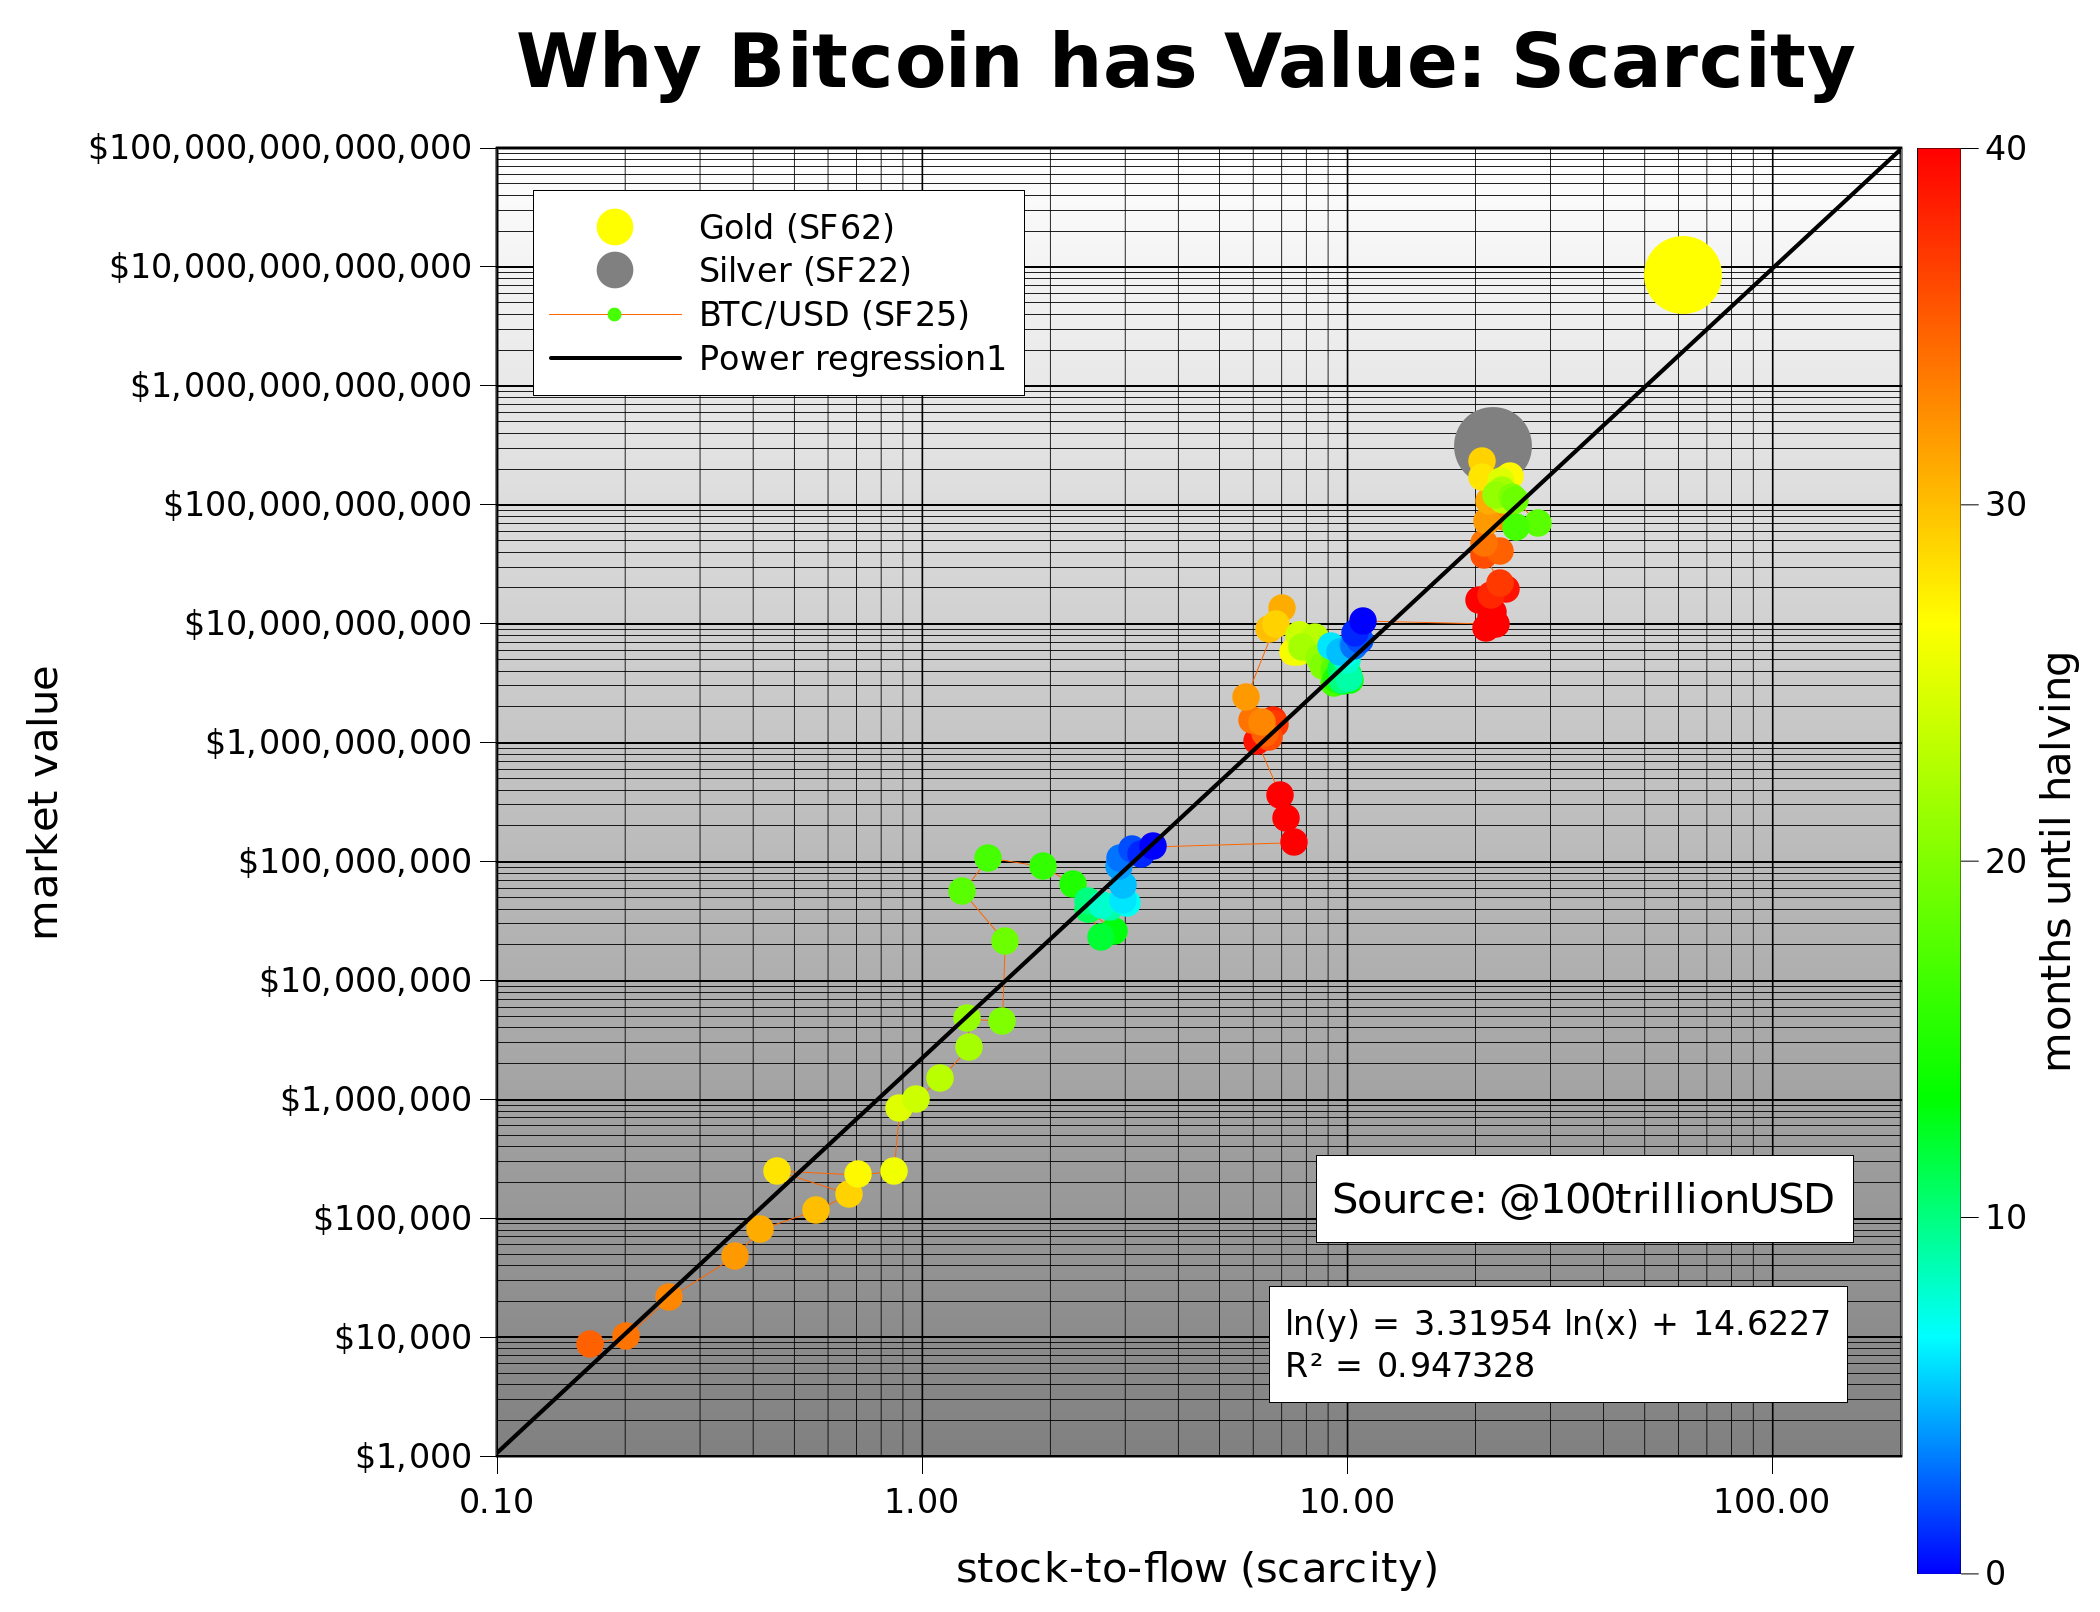 Bitcoin Future Growth Chart